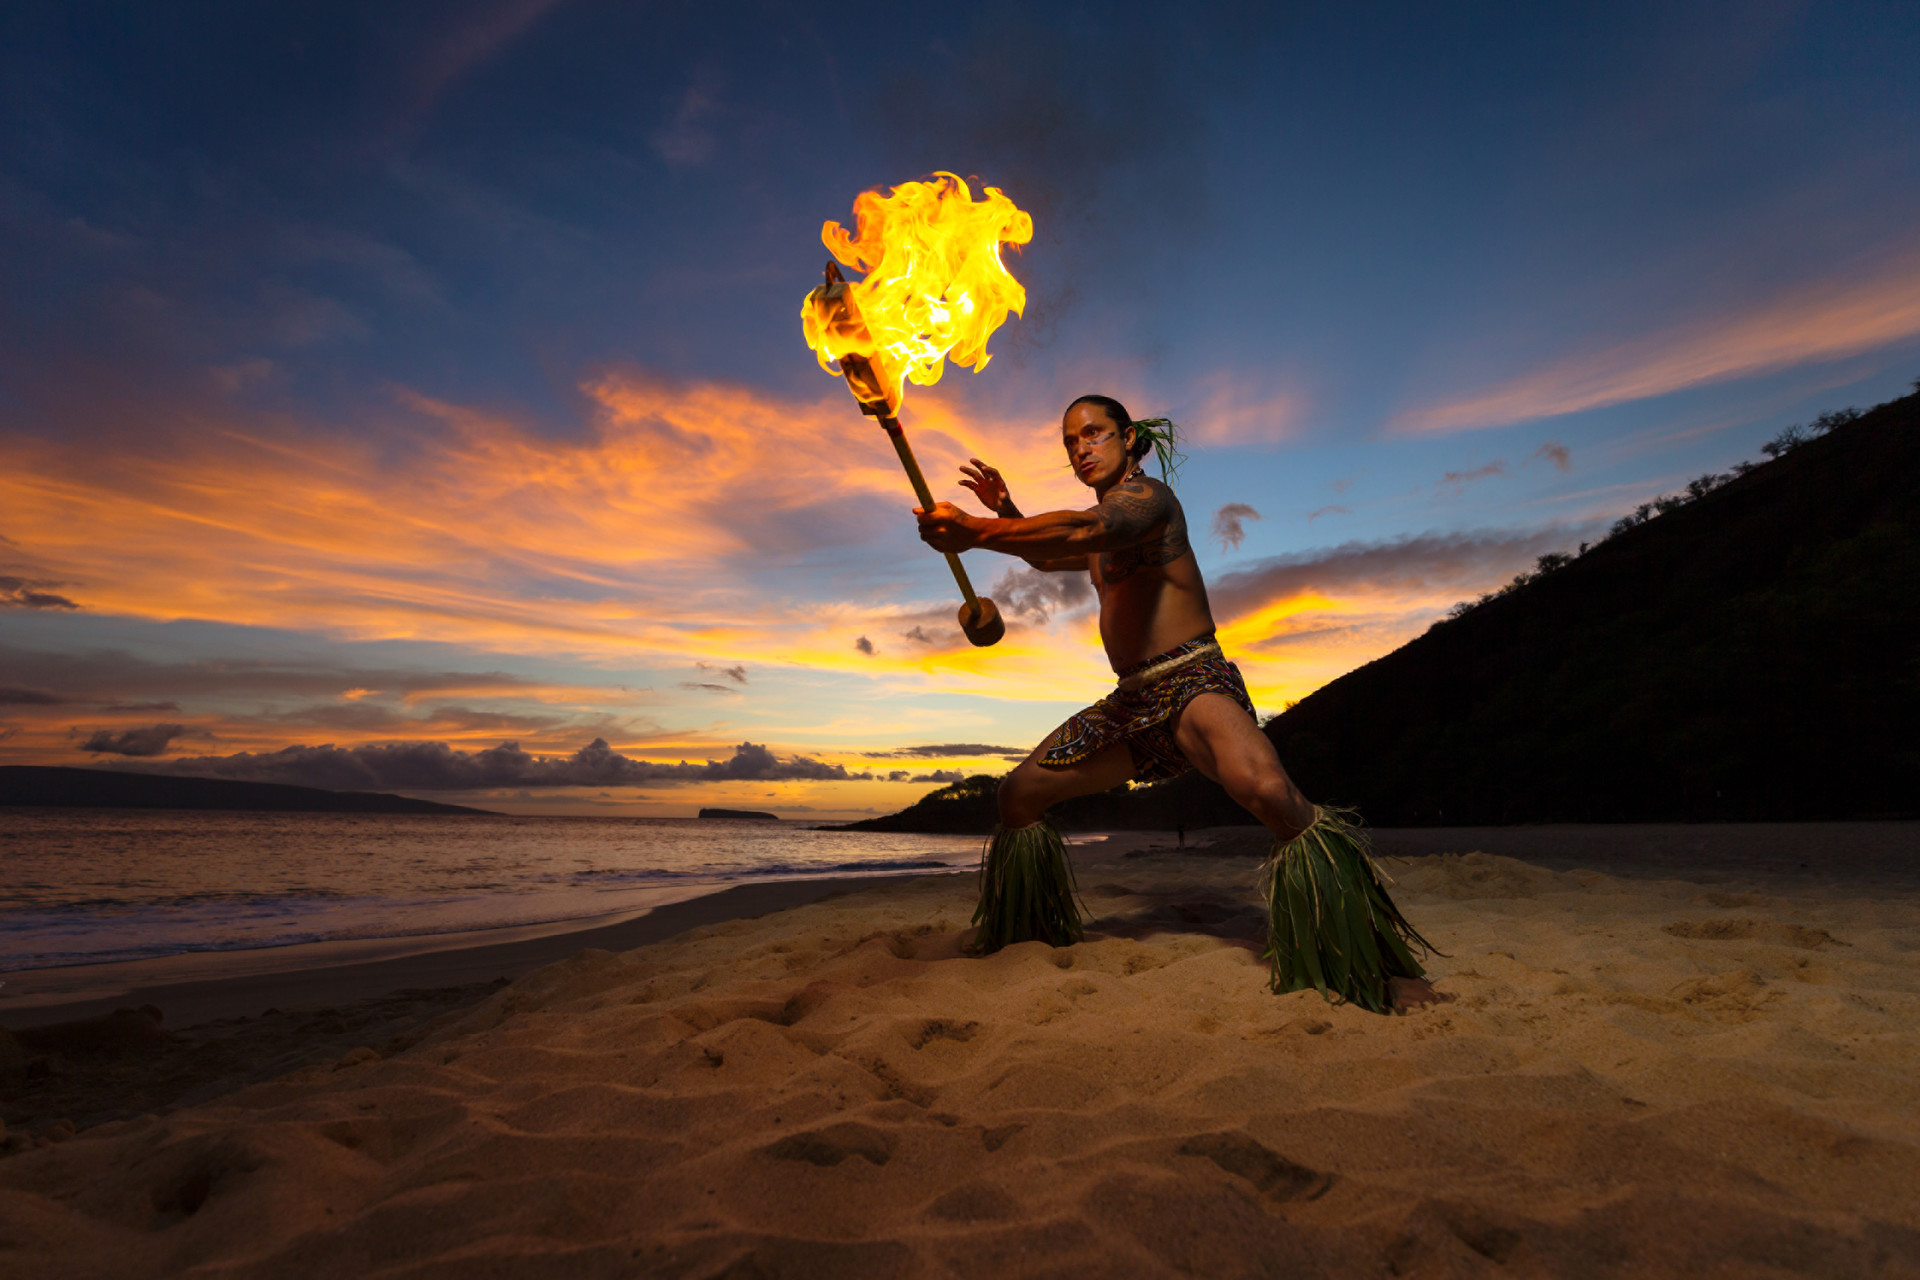 A Four Seasons Resort Maui Unforgettable Event: Maui Photo Expedition, June 14-19, 2016